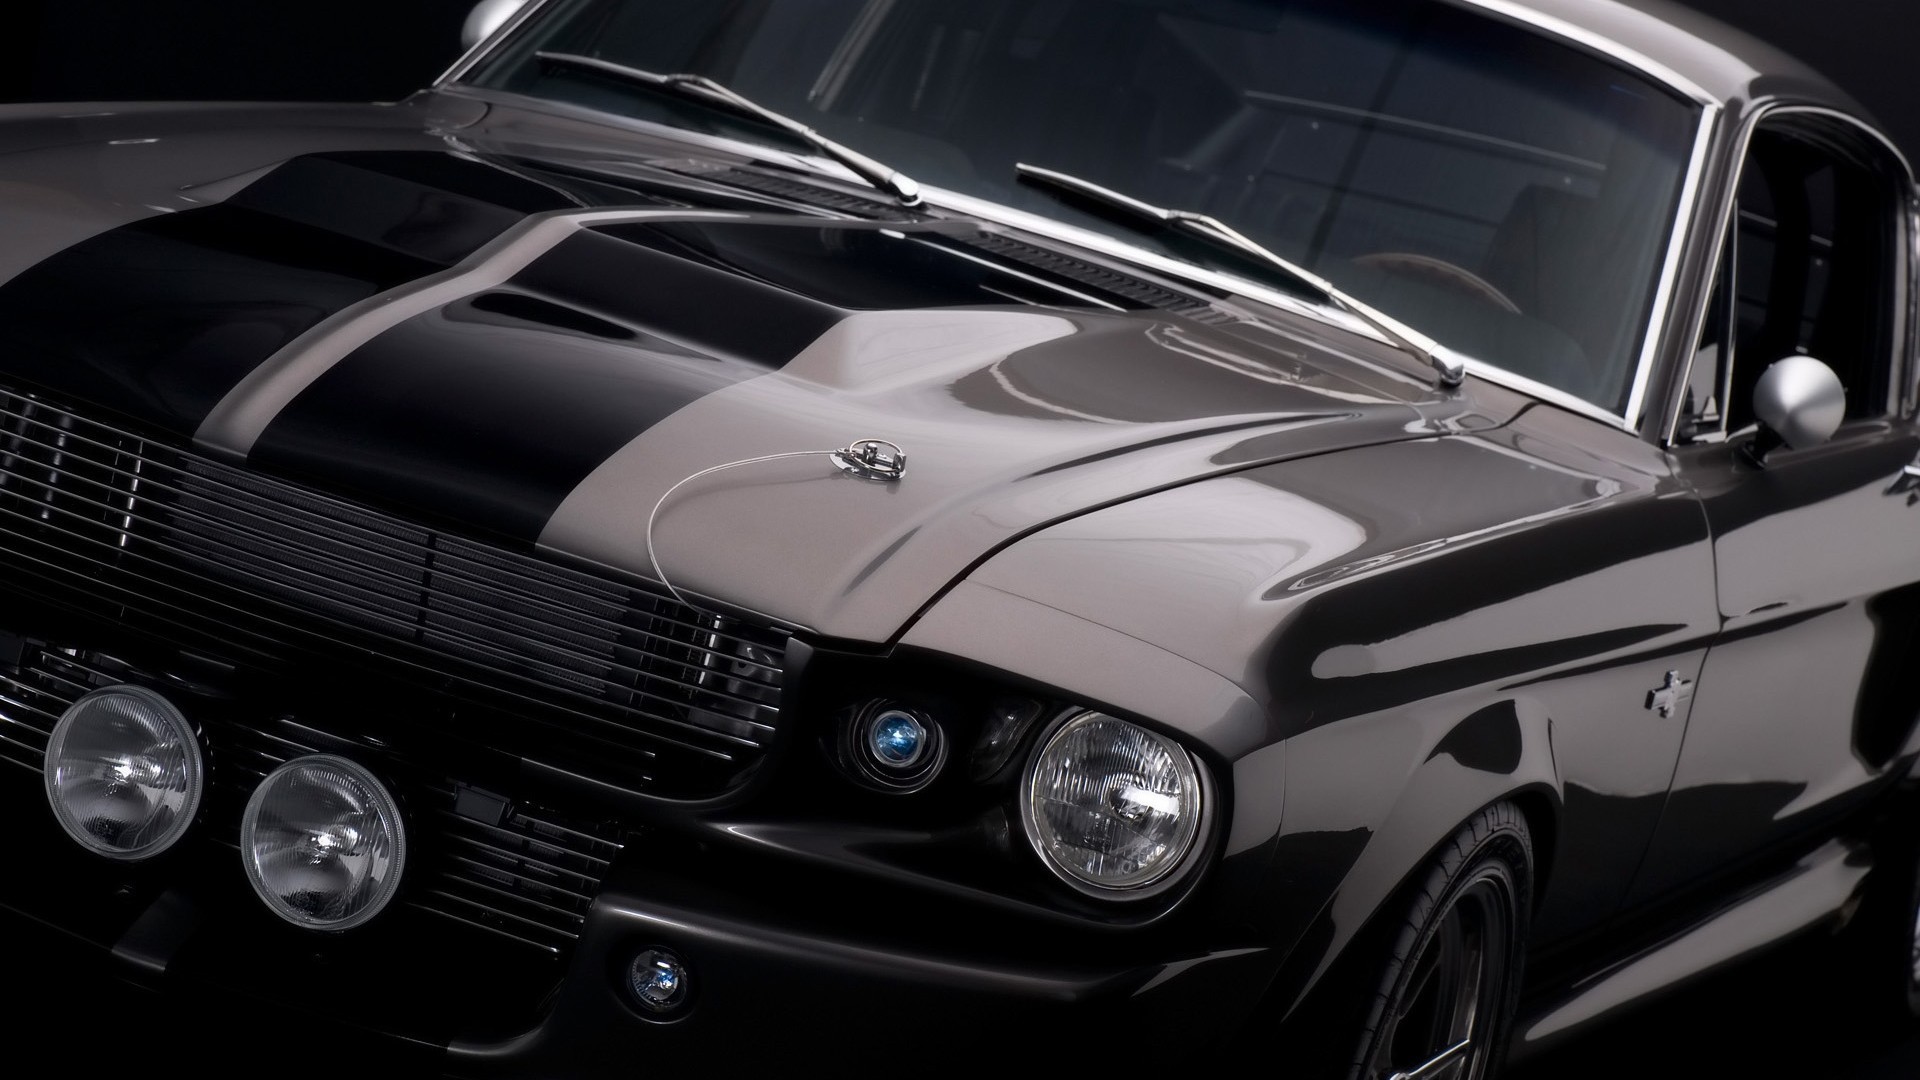 Ford Mustang GT500 Shelby Cobra HD wallpaper | cars | Wallpaper Better